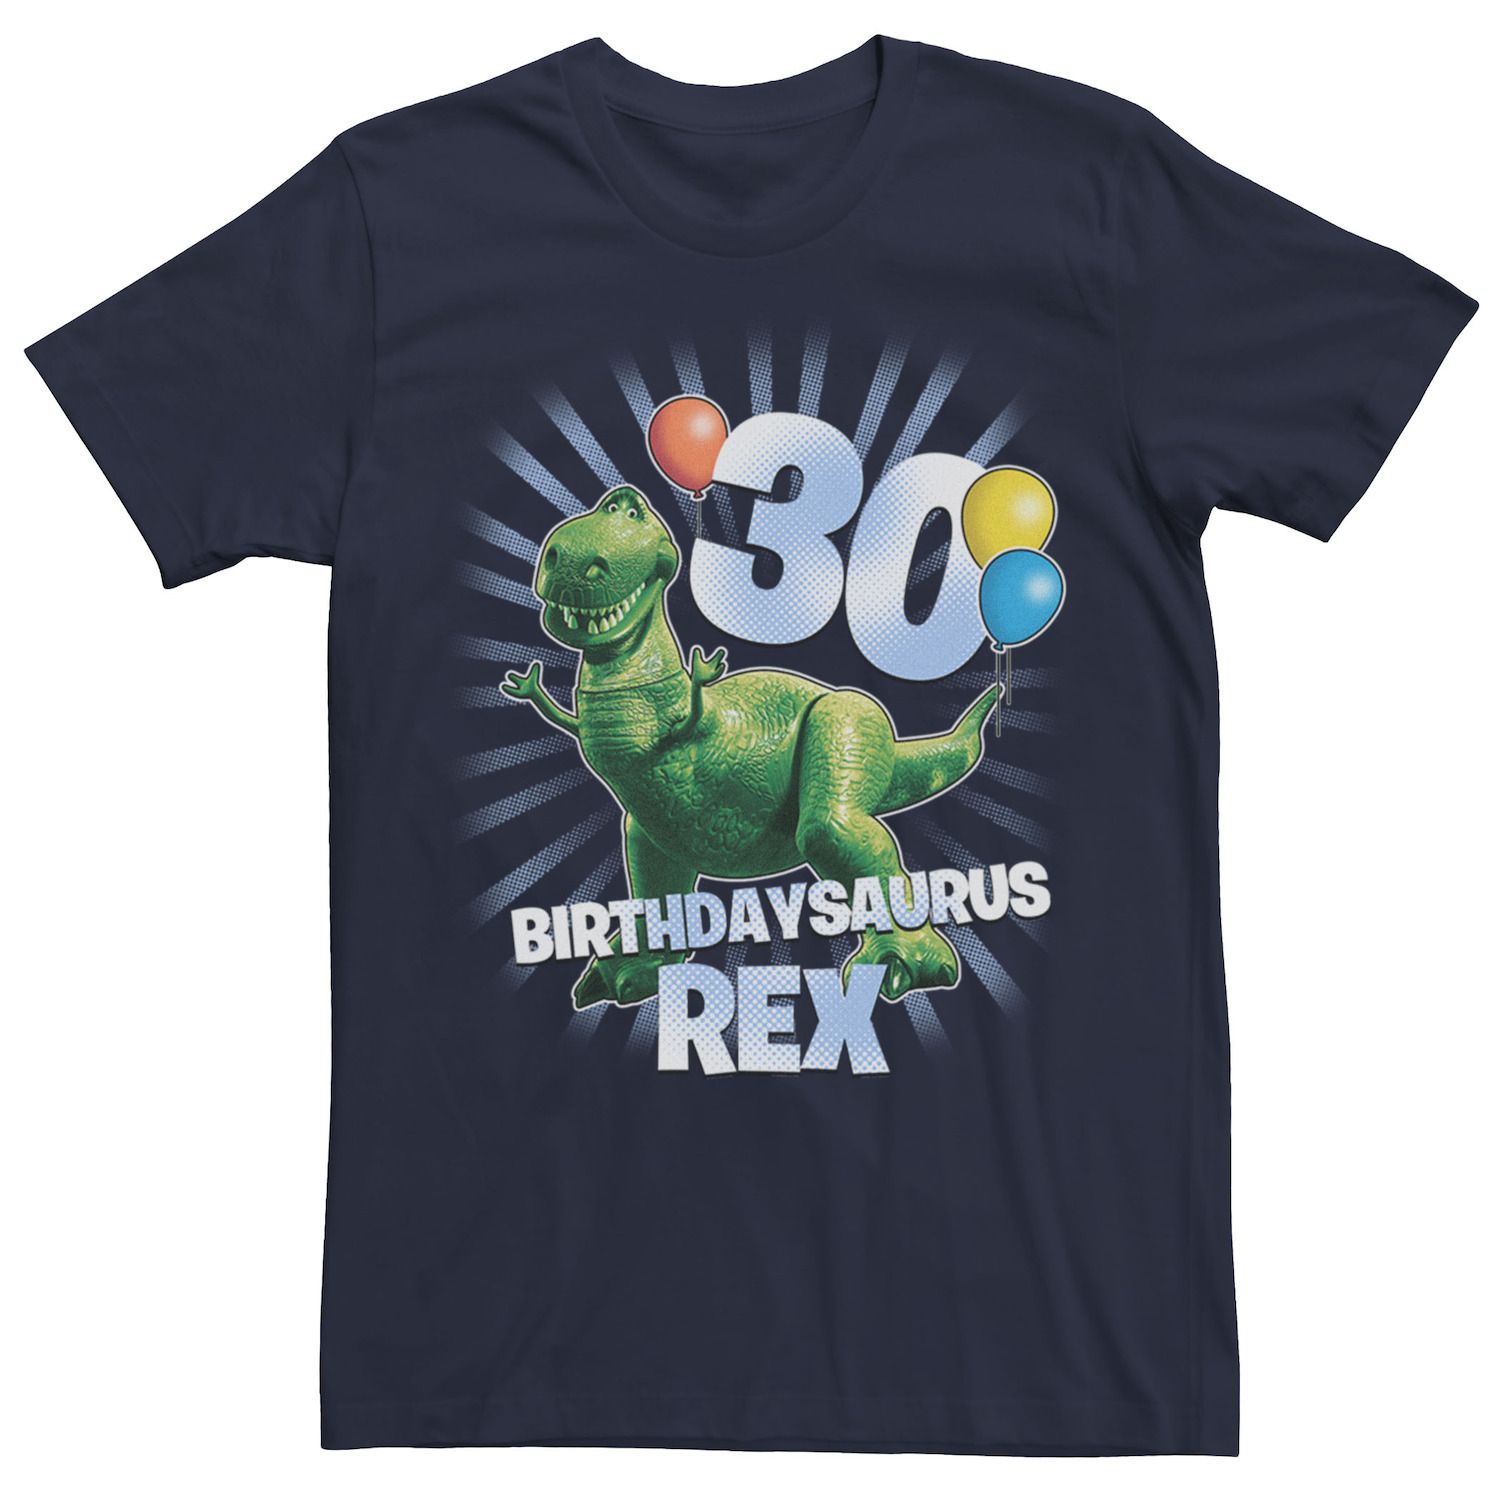 Image for Disney / Pixar Men's Toy Story Birthdaysaurus Rex 30th Birthday Tee at Kohl's.